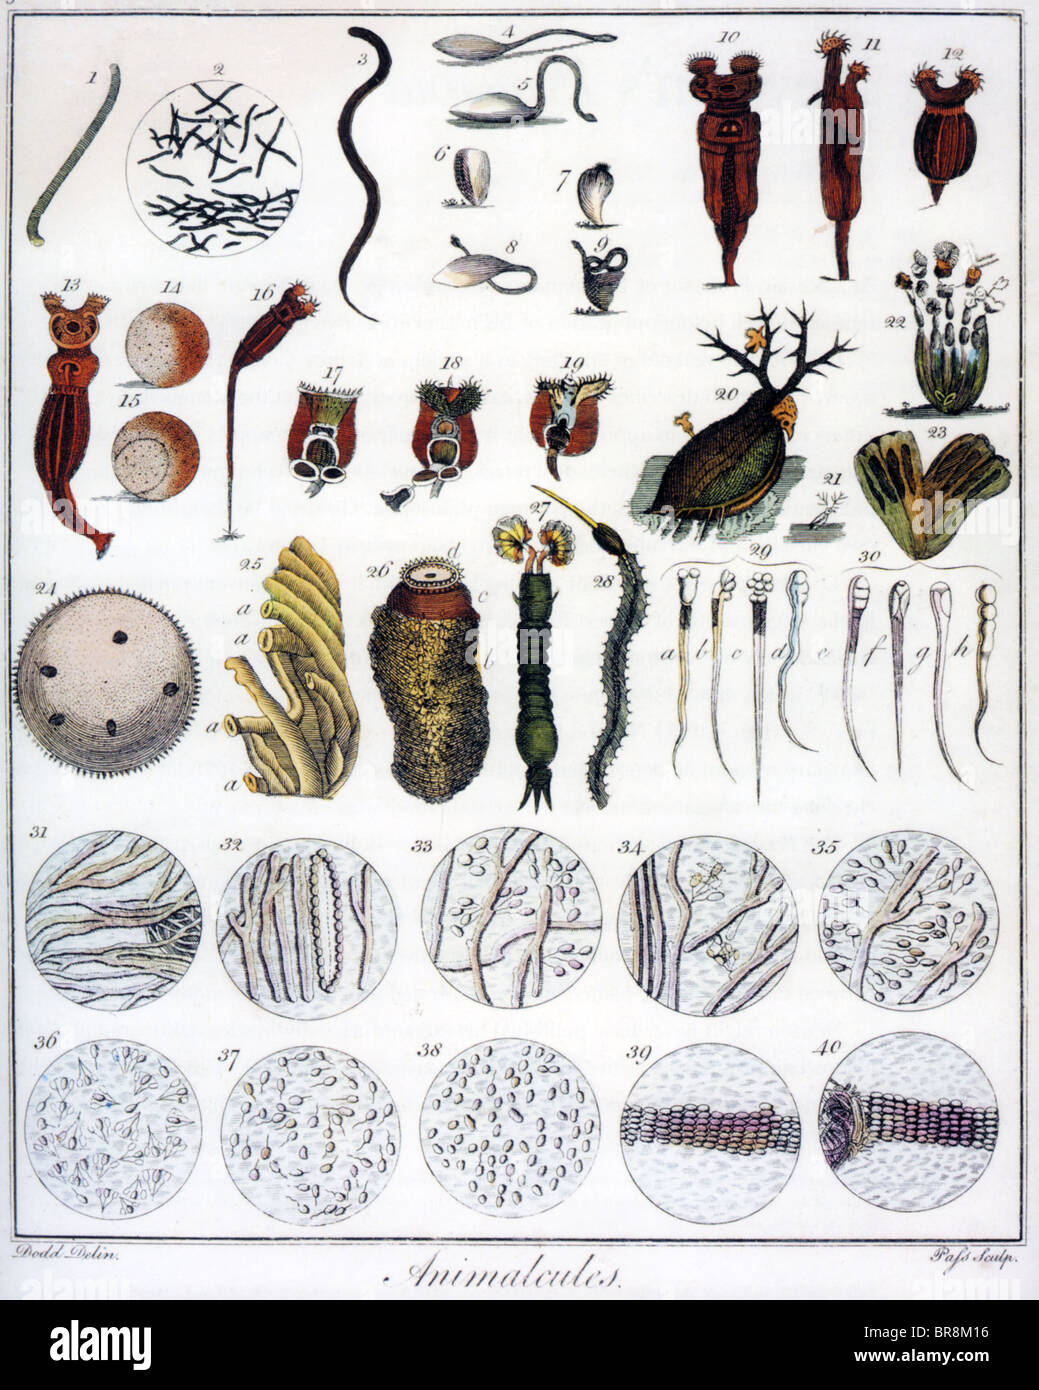 ANIMACULES  Microscopic animals based on drawings by Dutch scientist van Leeuwenhoek (1632-1723). Human sperm at lower left Stock Photo